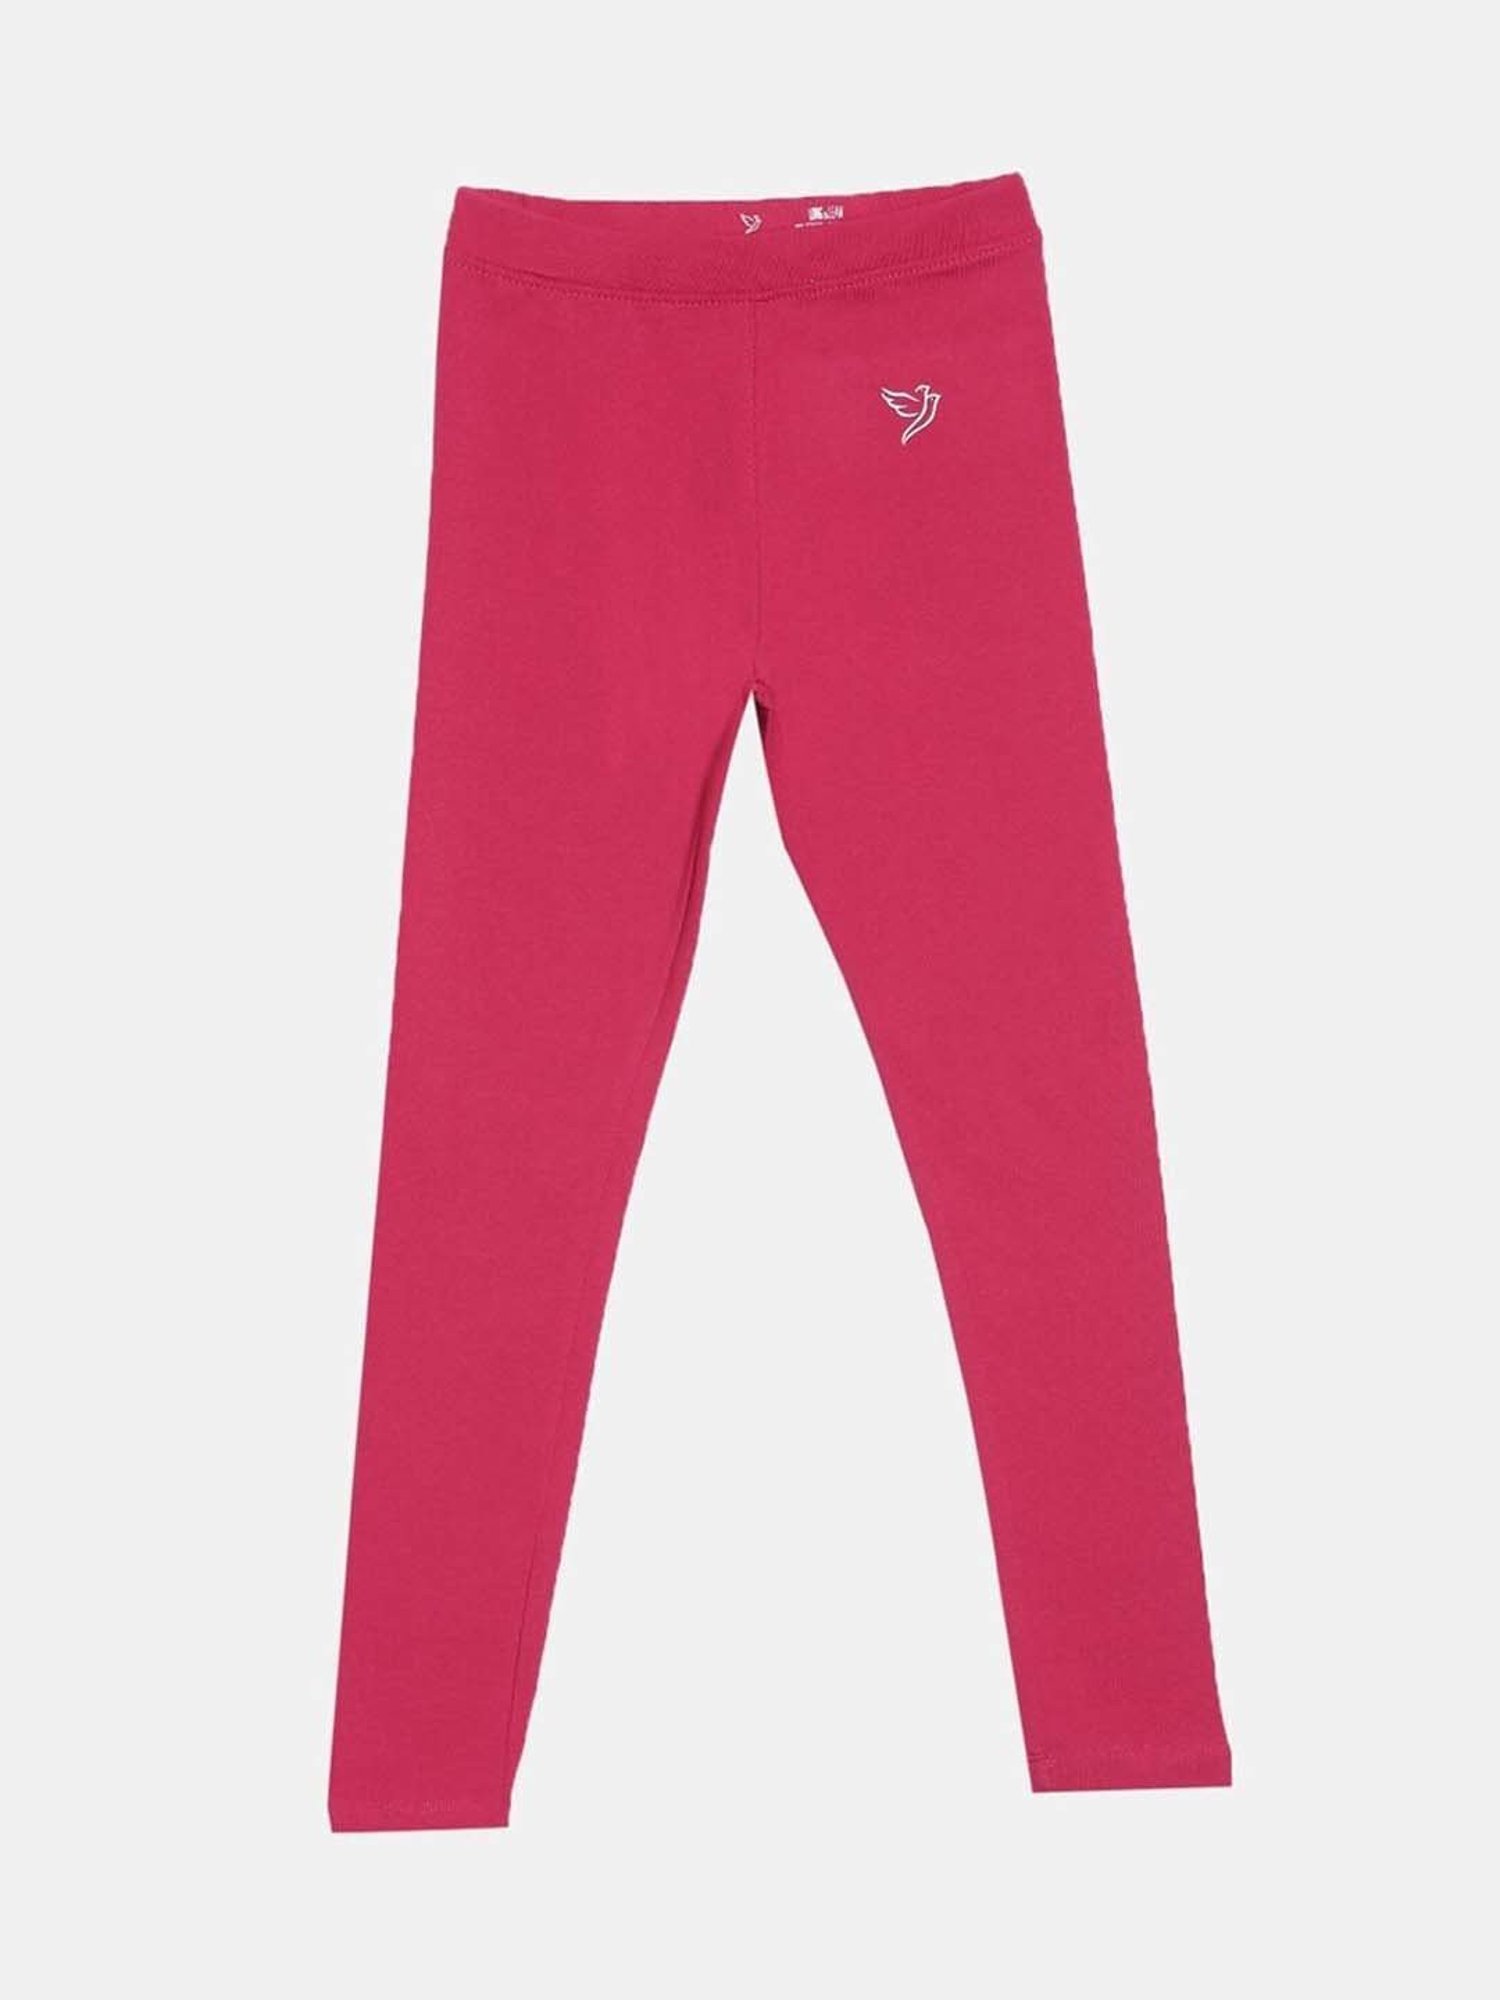 Buy Jockey Kids Pink Cotton Regular Fit Leggings for Girls Clothing Online  @ Tata CLiQ